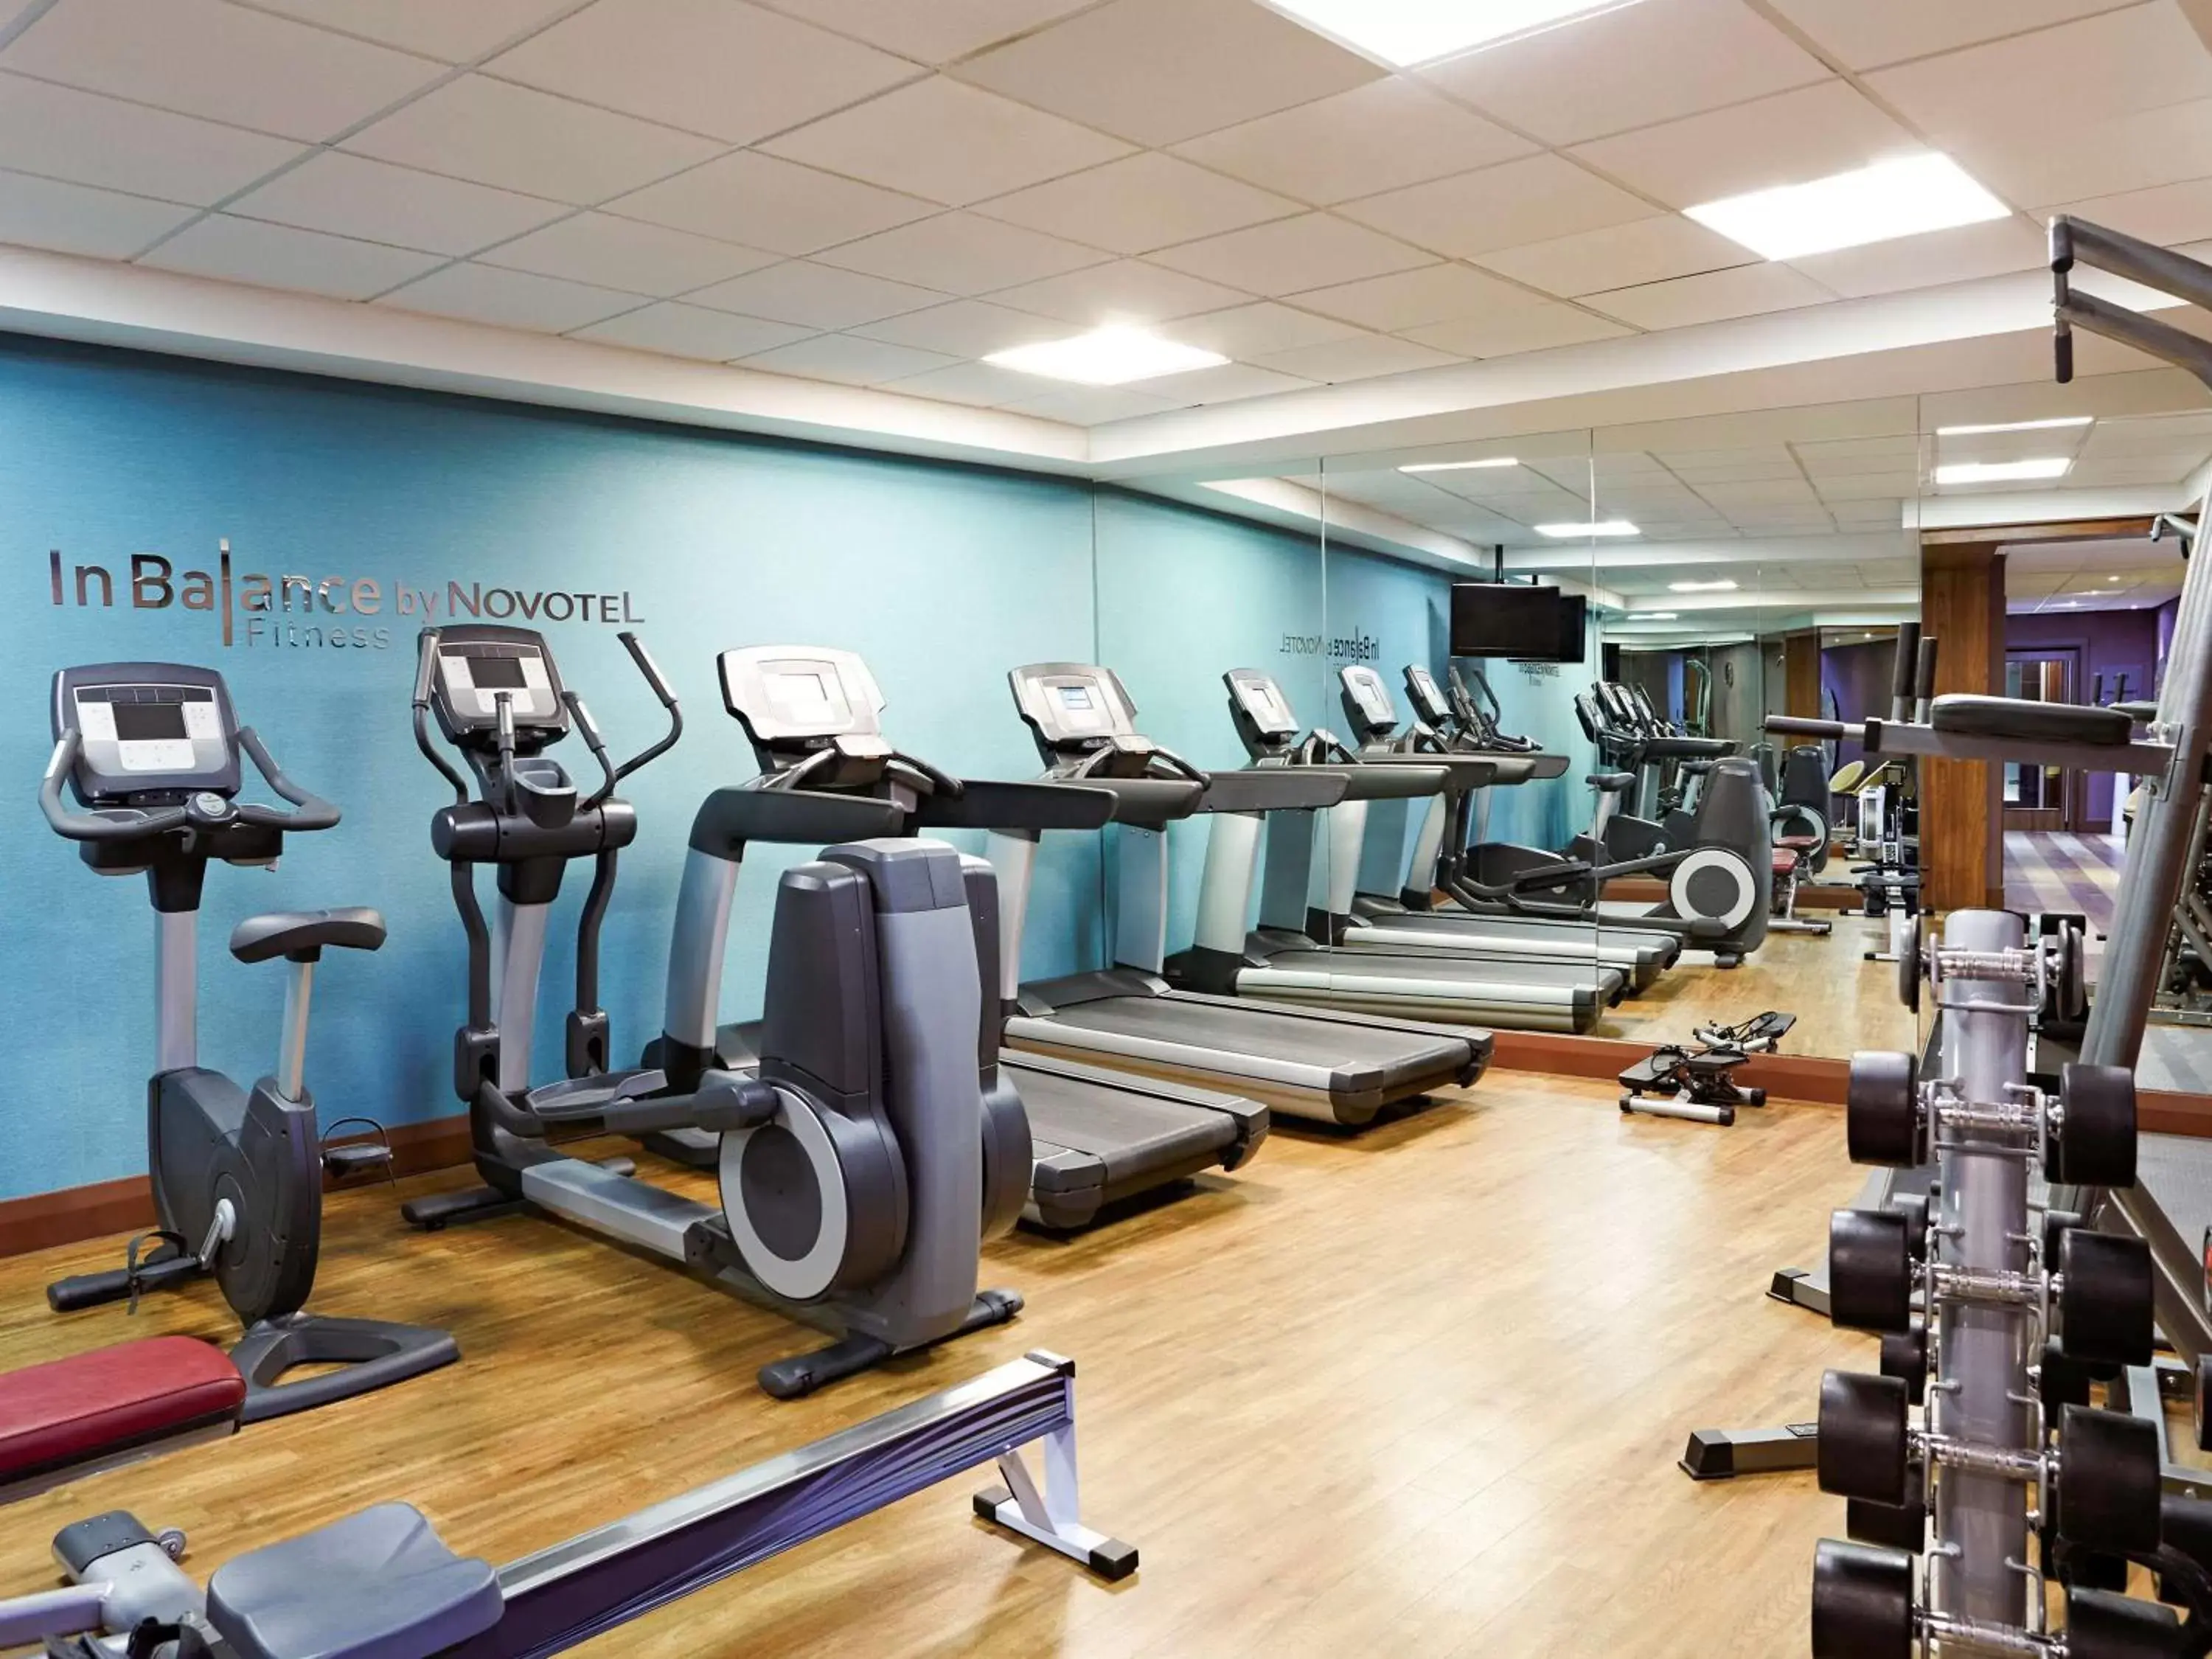 Fitness centre/facilities, Fitness Center/Facilities in Novotel London Waterloo